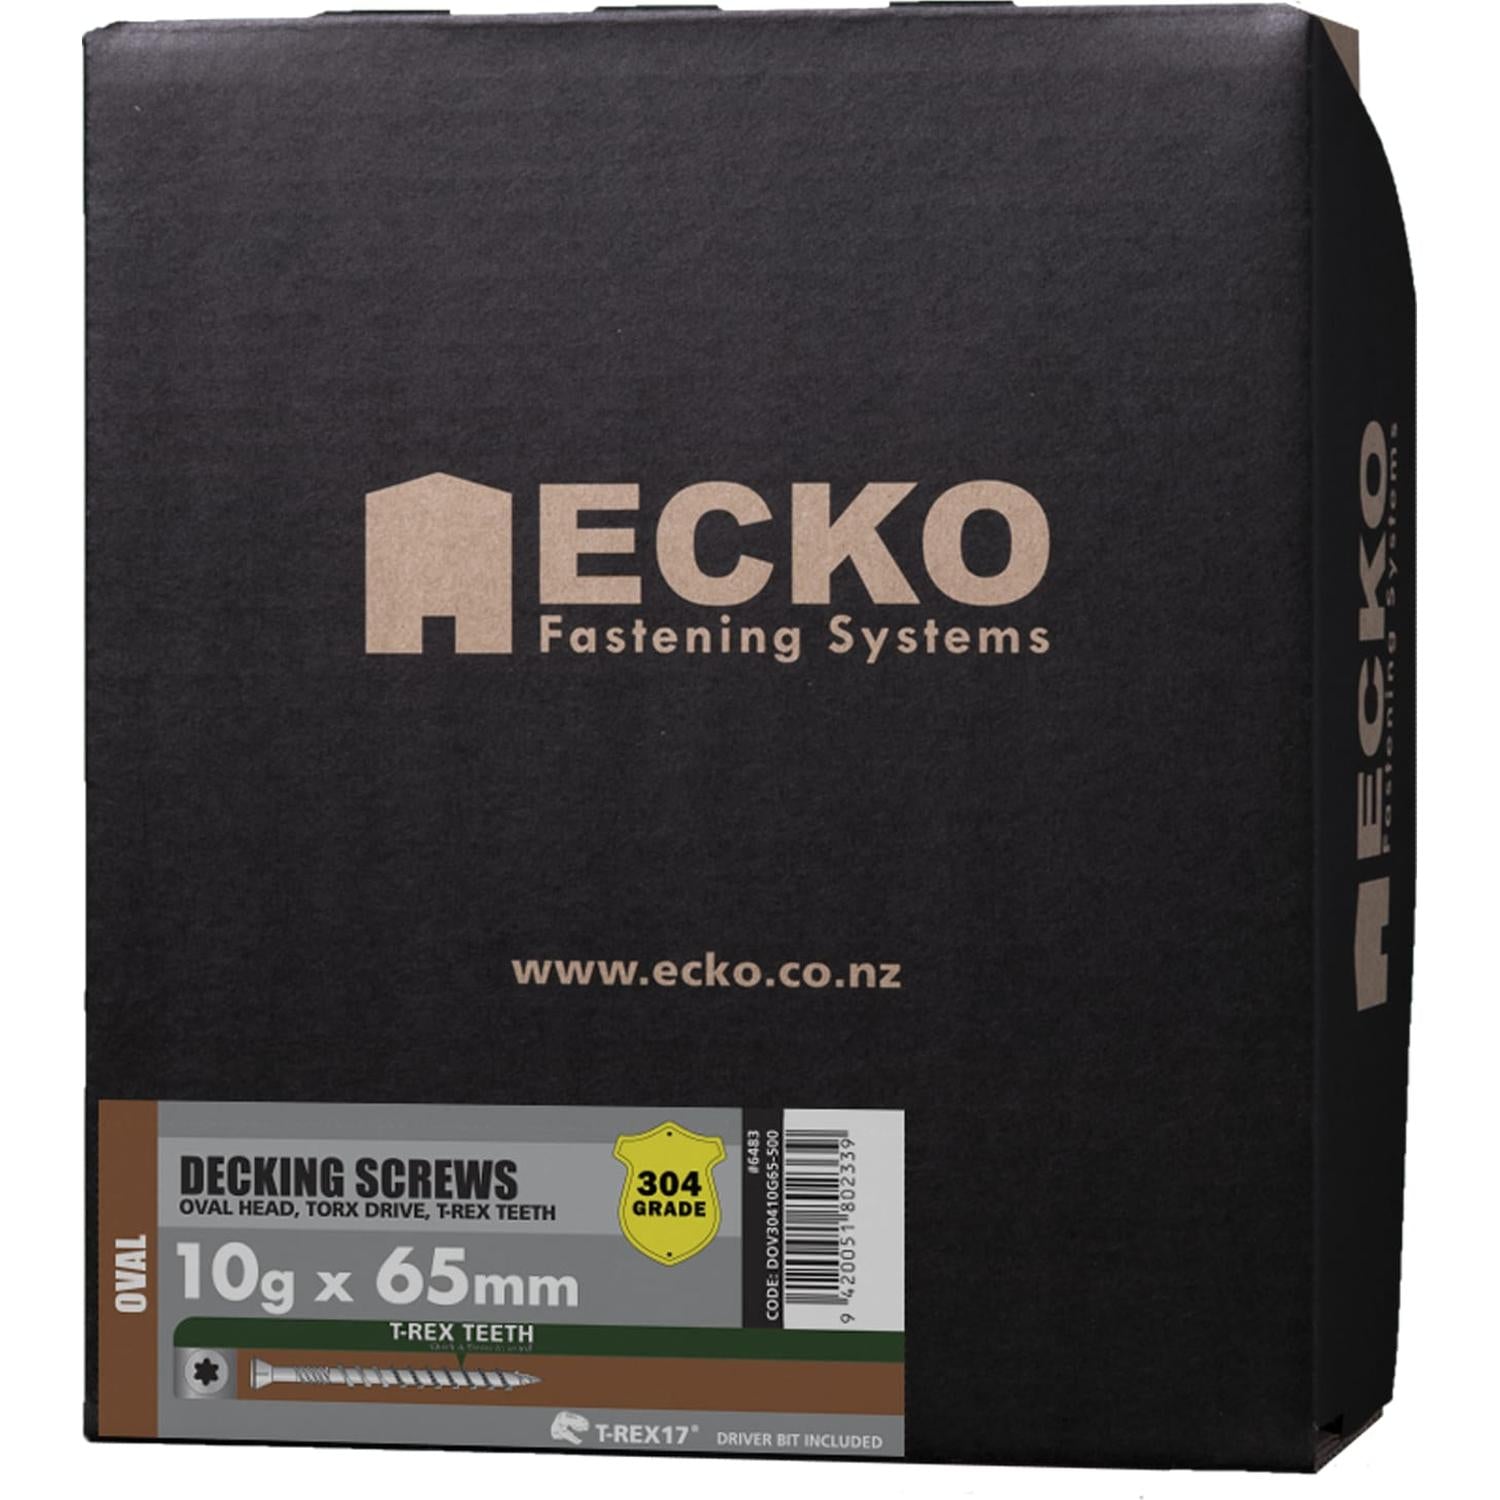 Ecko T-Rex17 10G X 65Mm Oval Head Decking Screws  (500 Box)